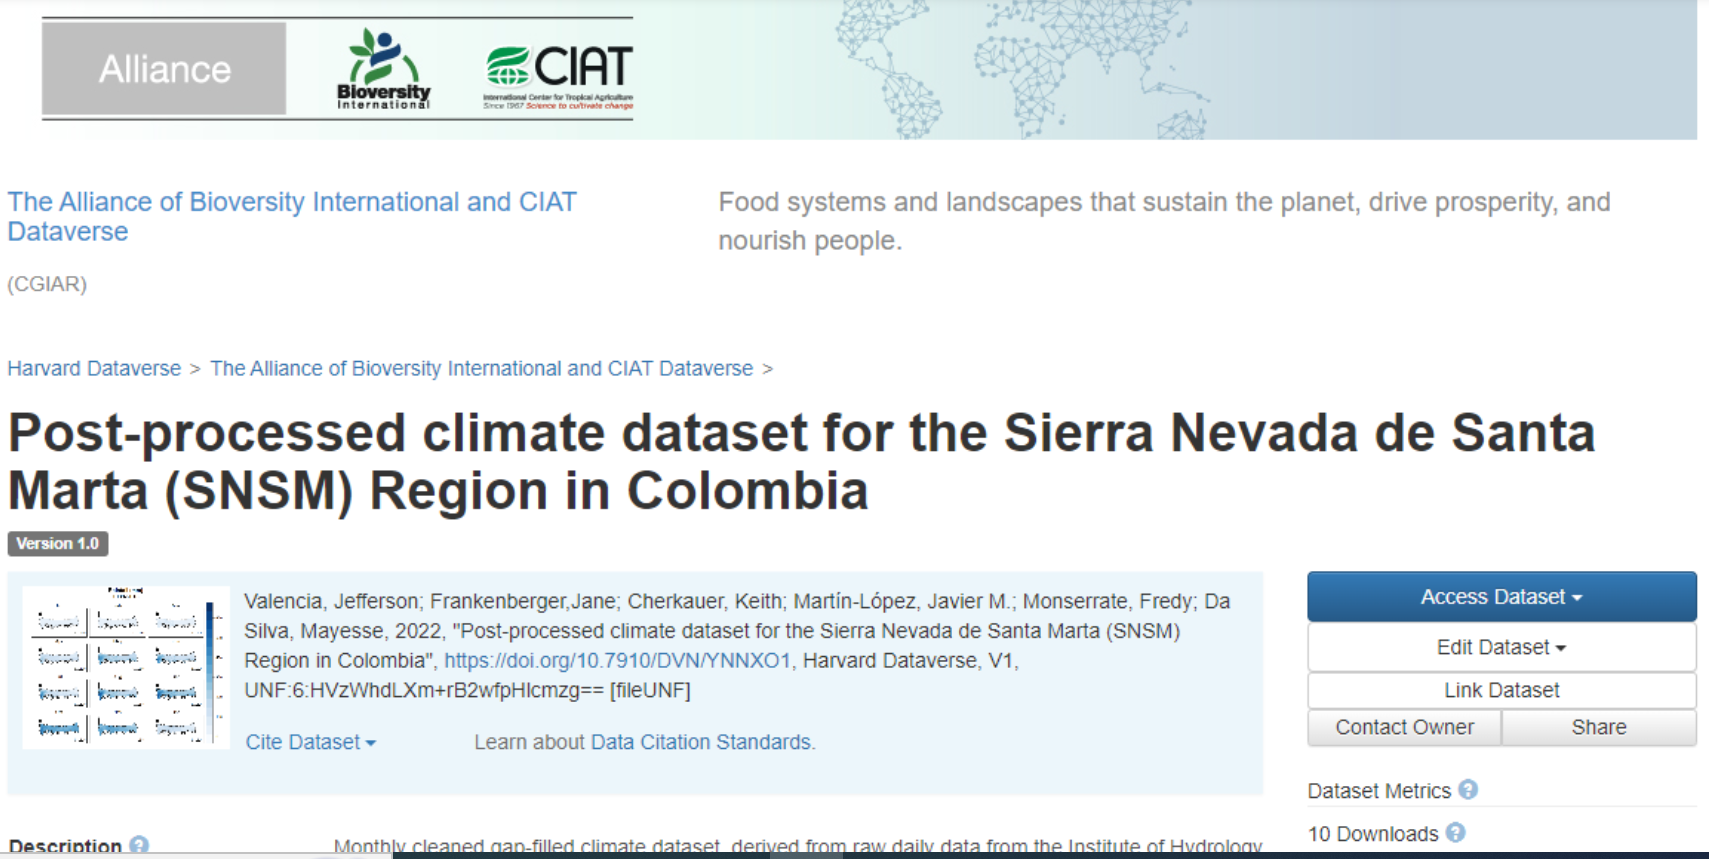 Post-processed climate dataset for the Sierra Nevada de Santa Marta - SNSM - Region in Colombia